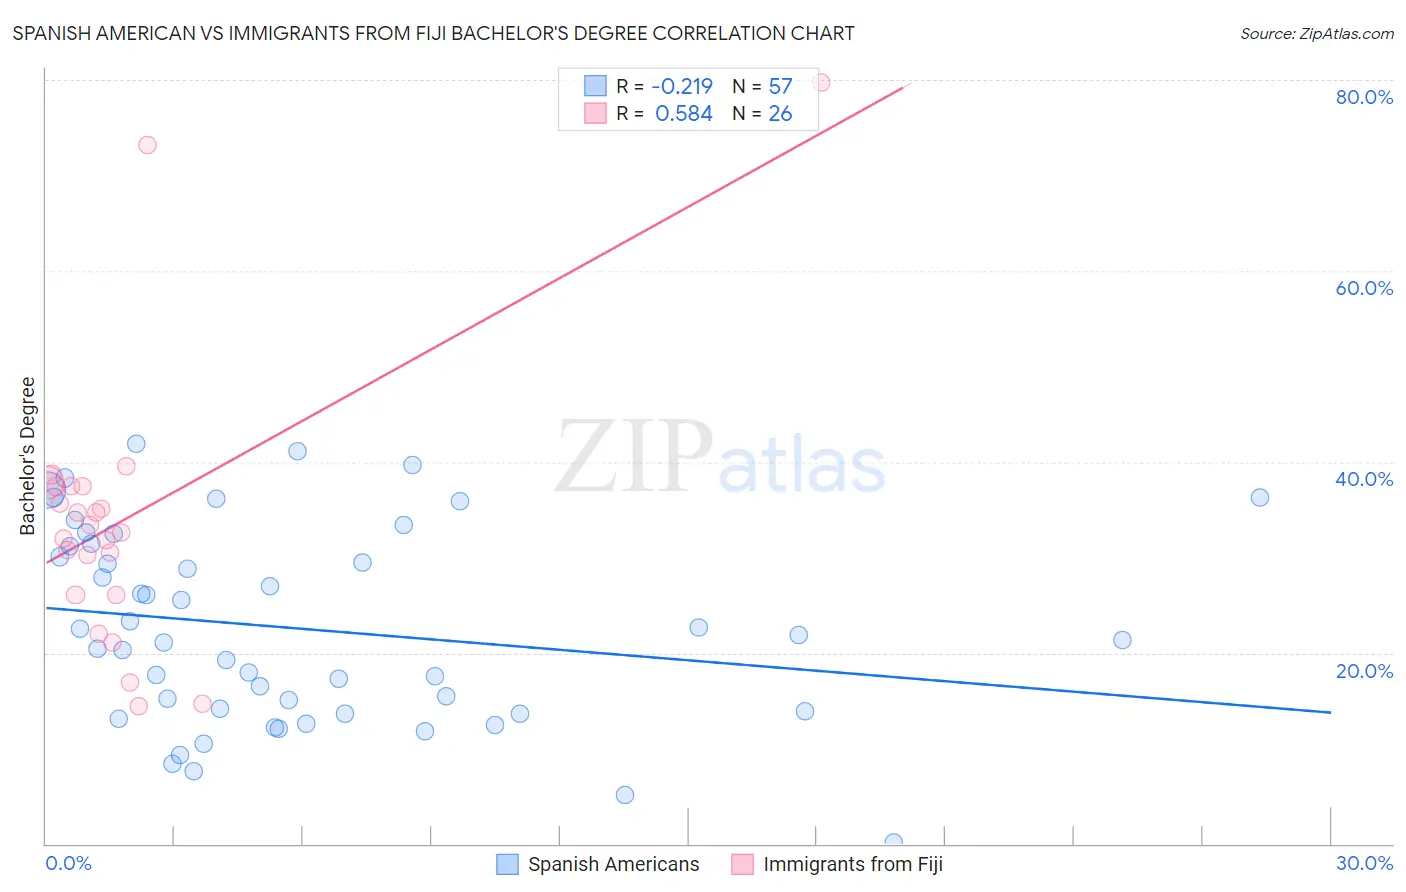 Spanish American vs Immigrants from Fiji Bachelor's Degree